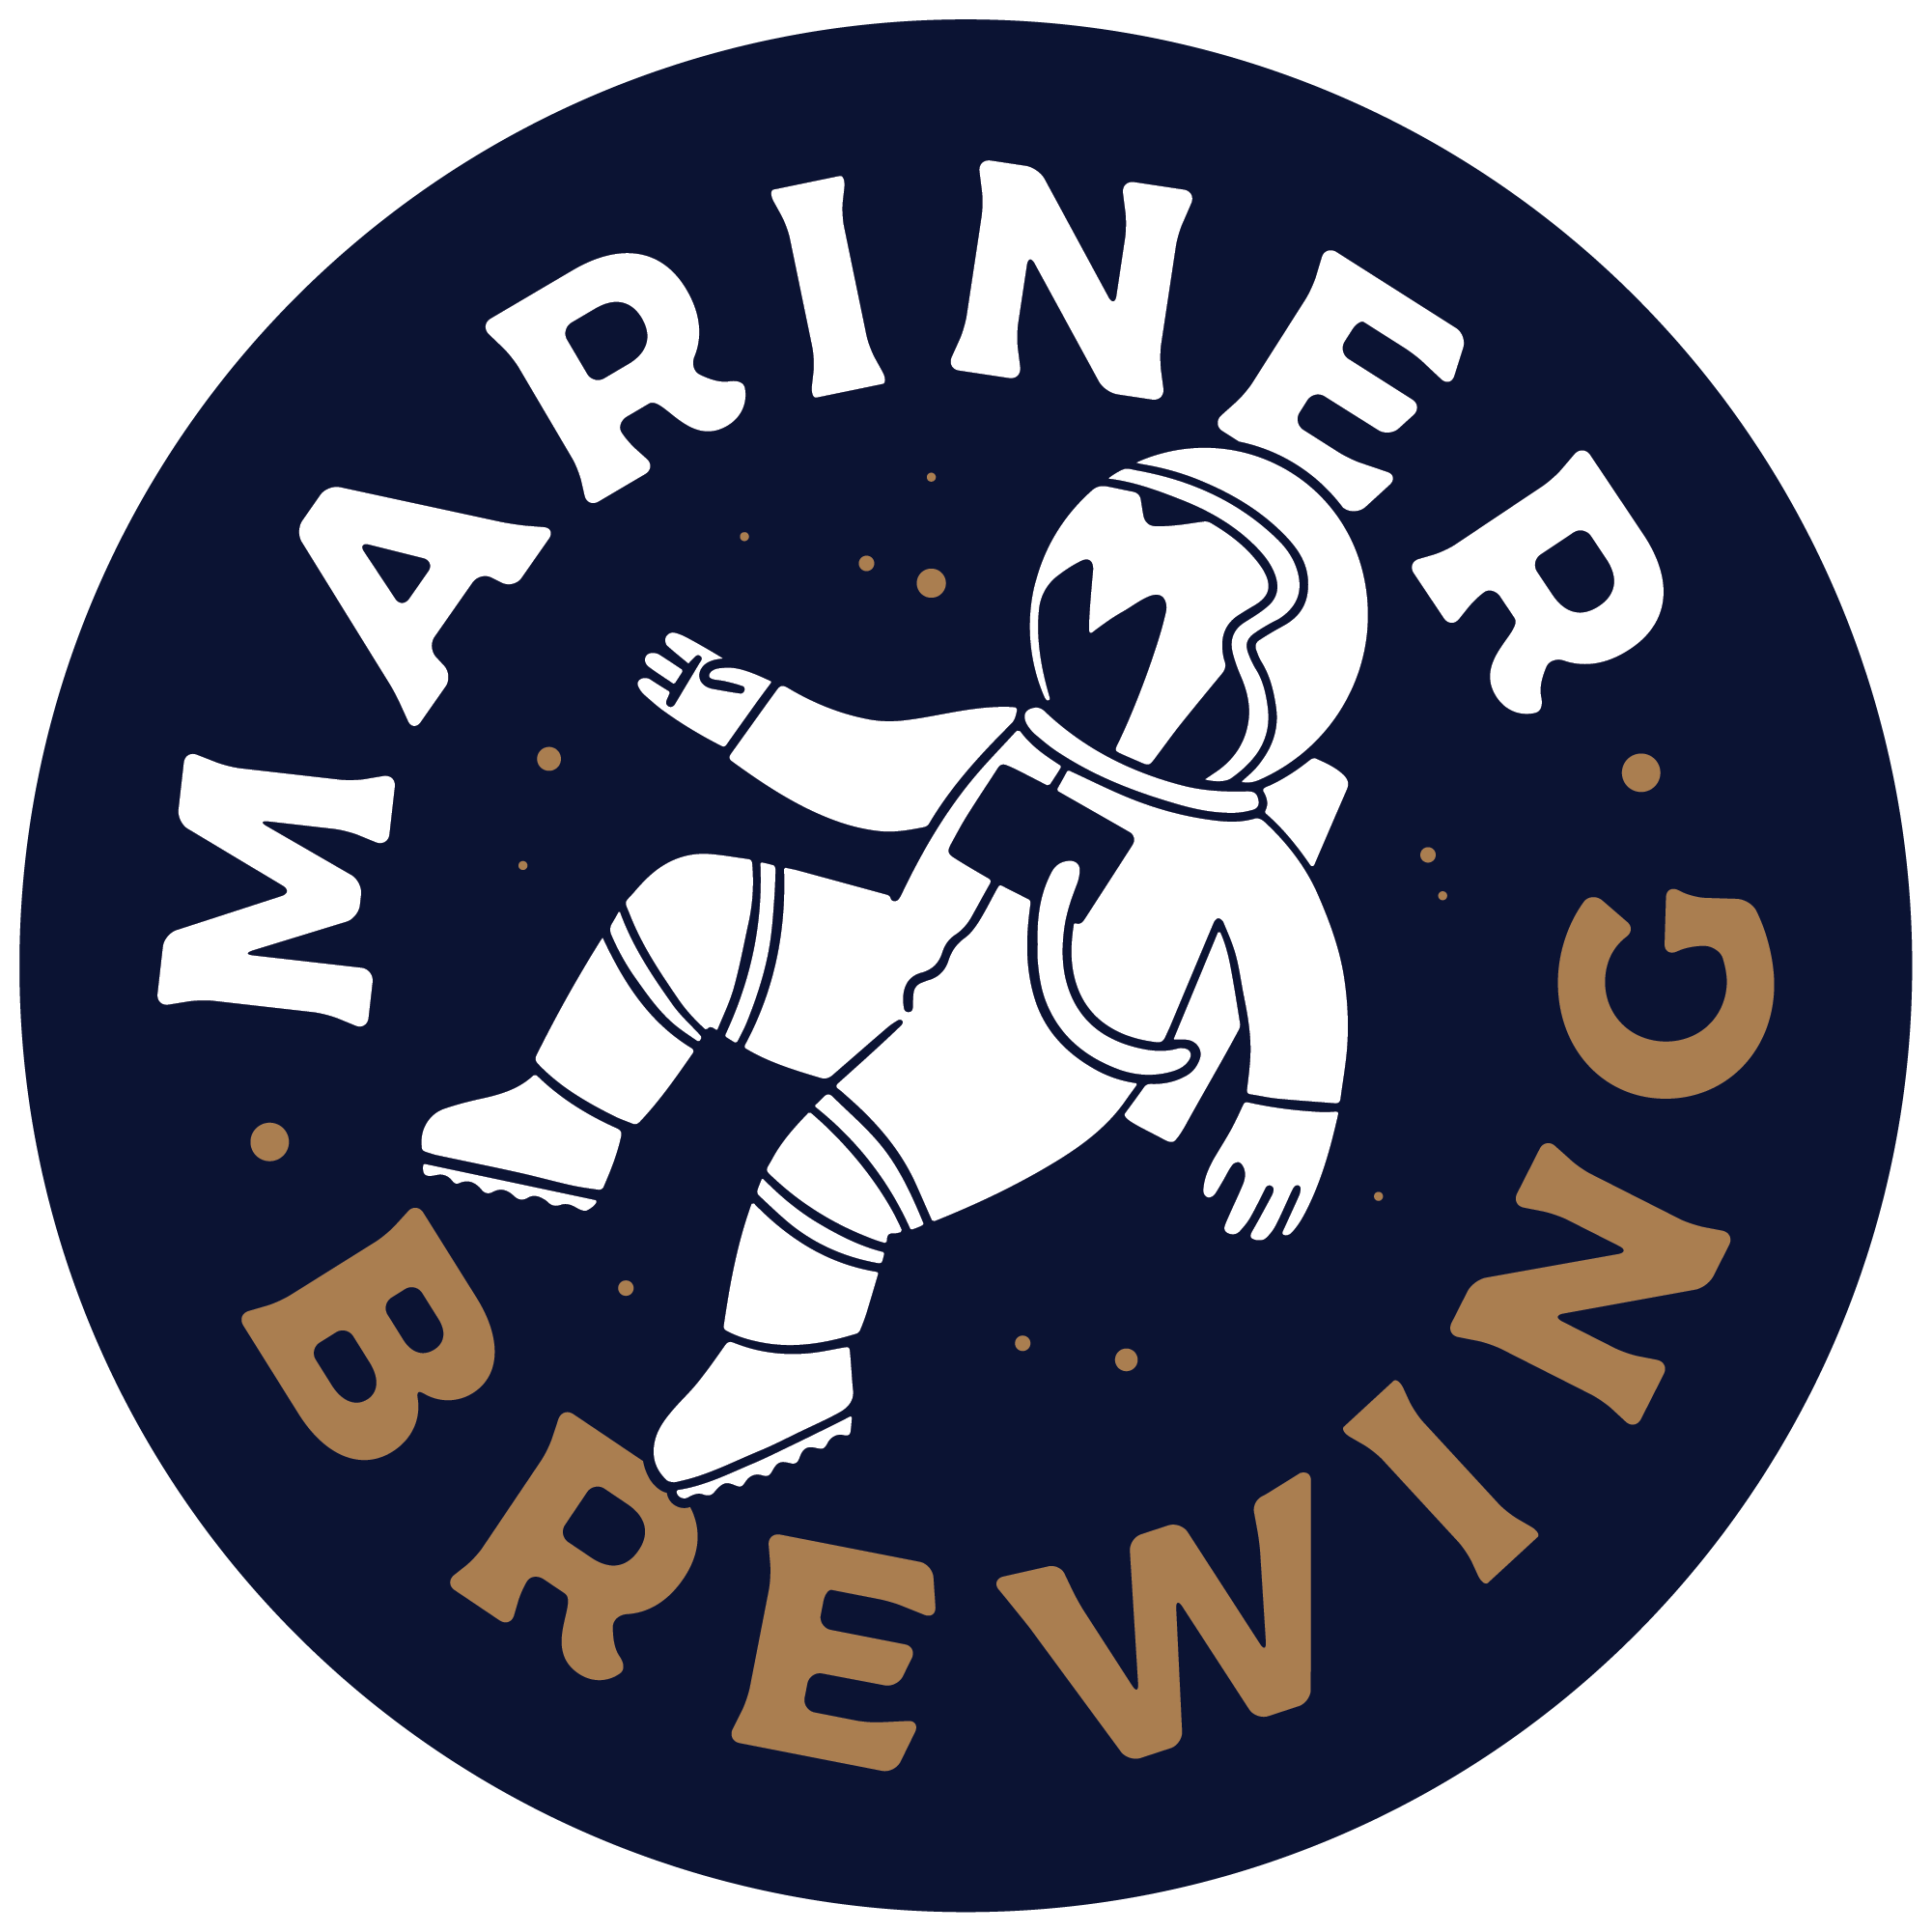 Mariner Brewing Co.